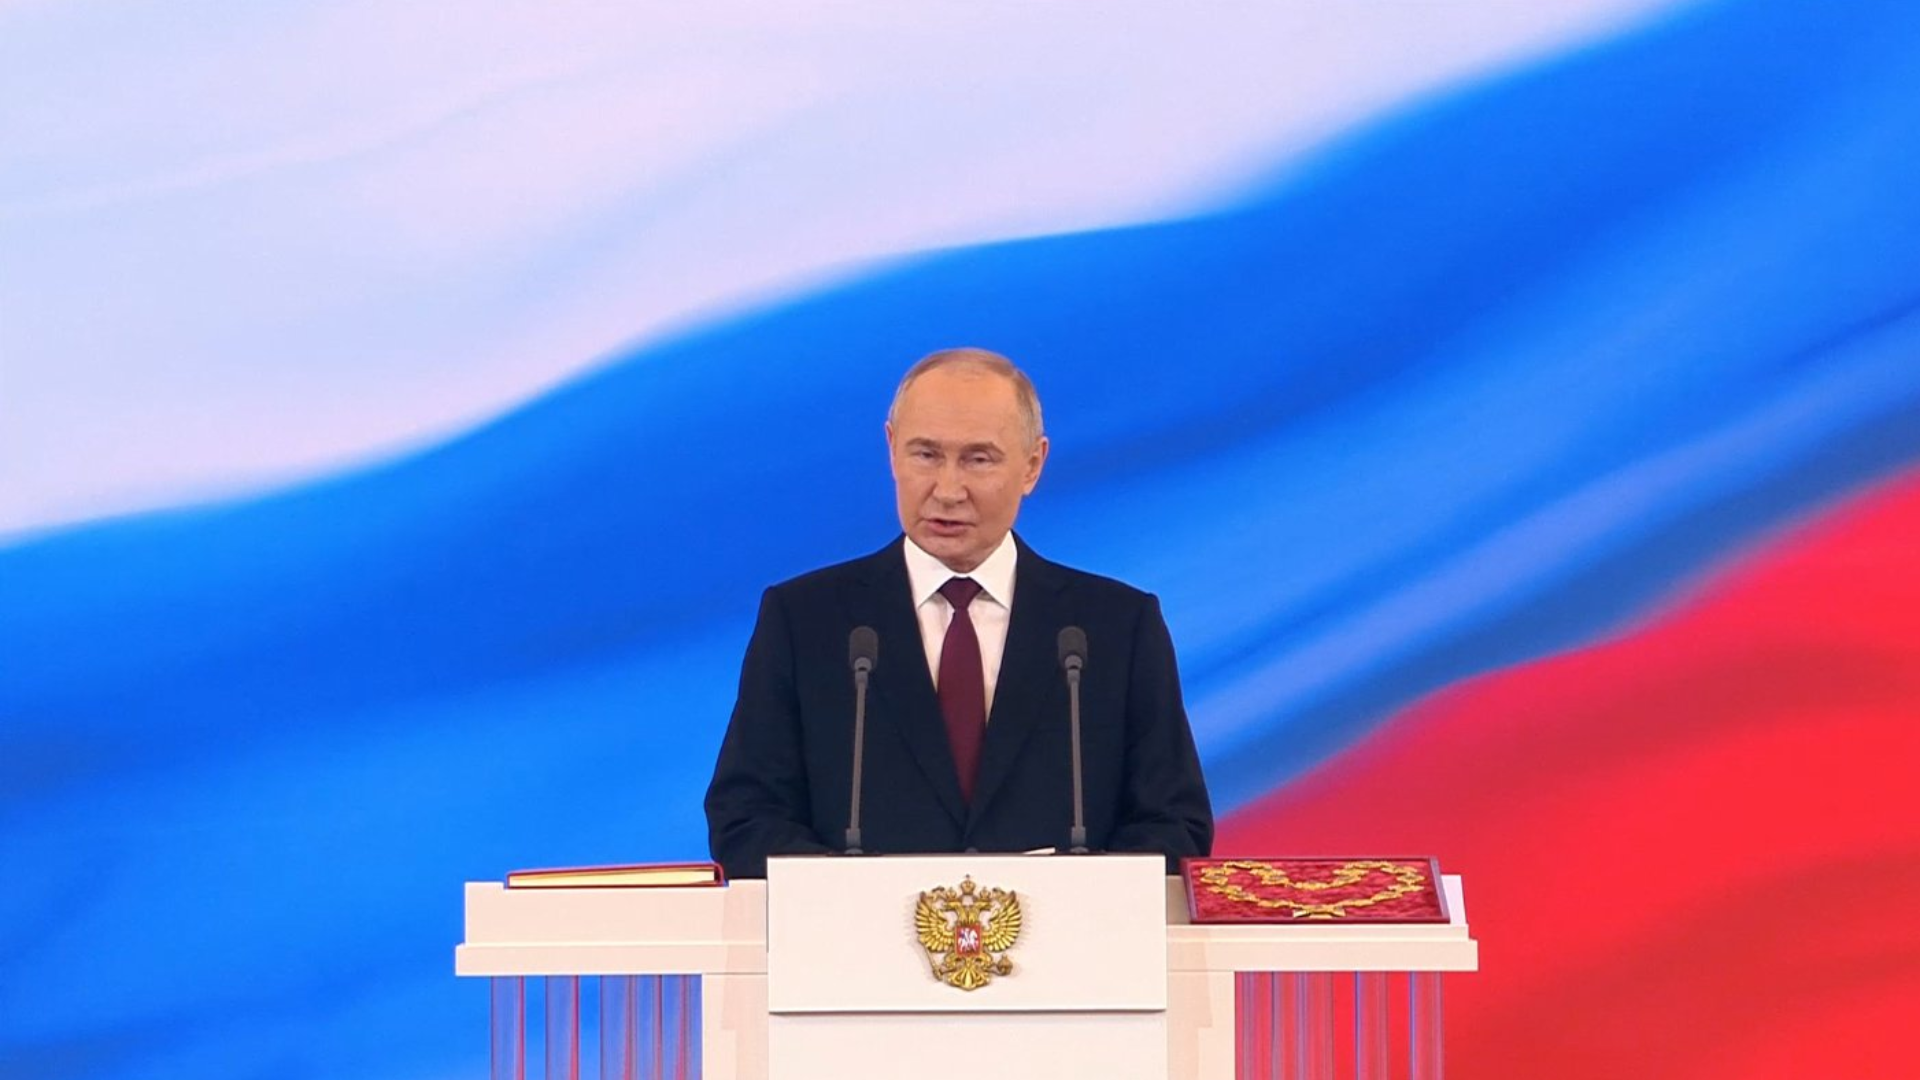 Vladimir Putin Begins His 5th Term as The Russian President